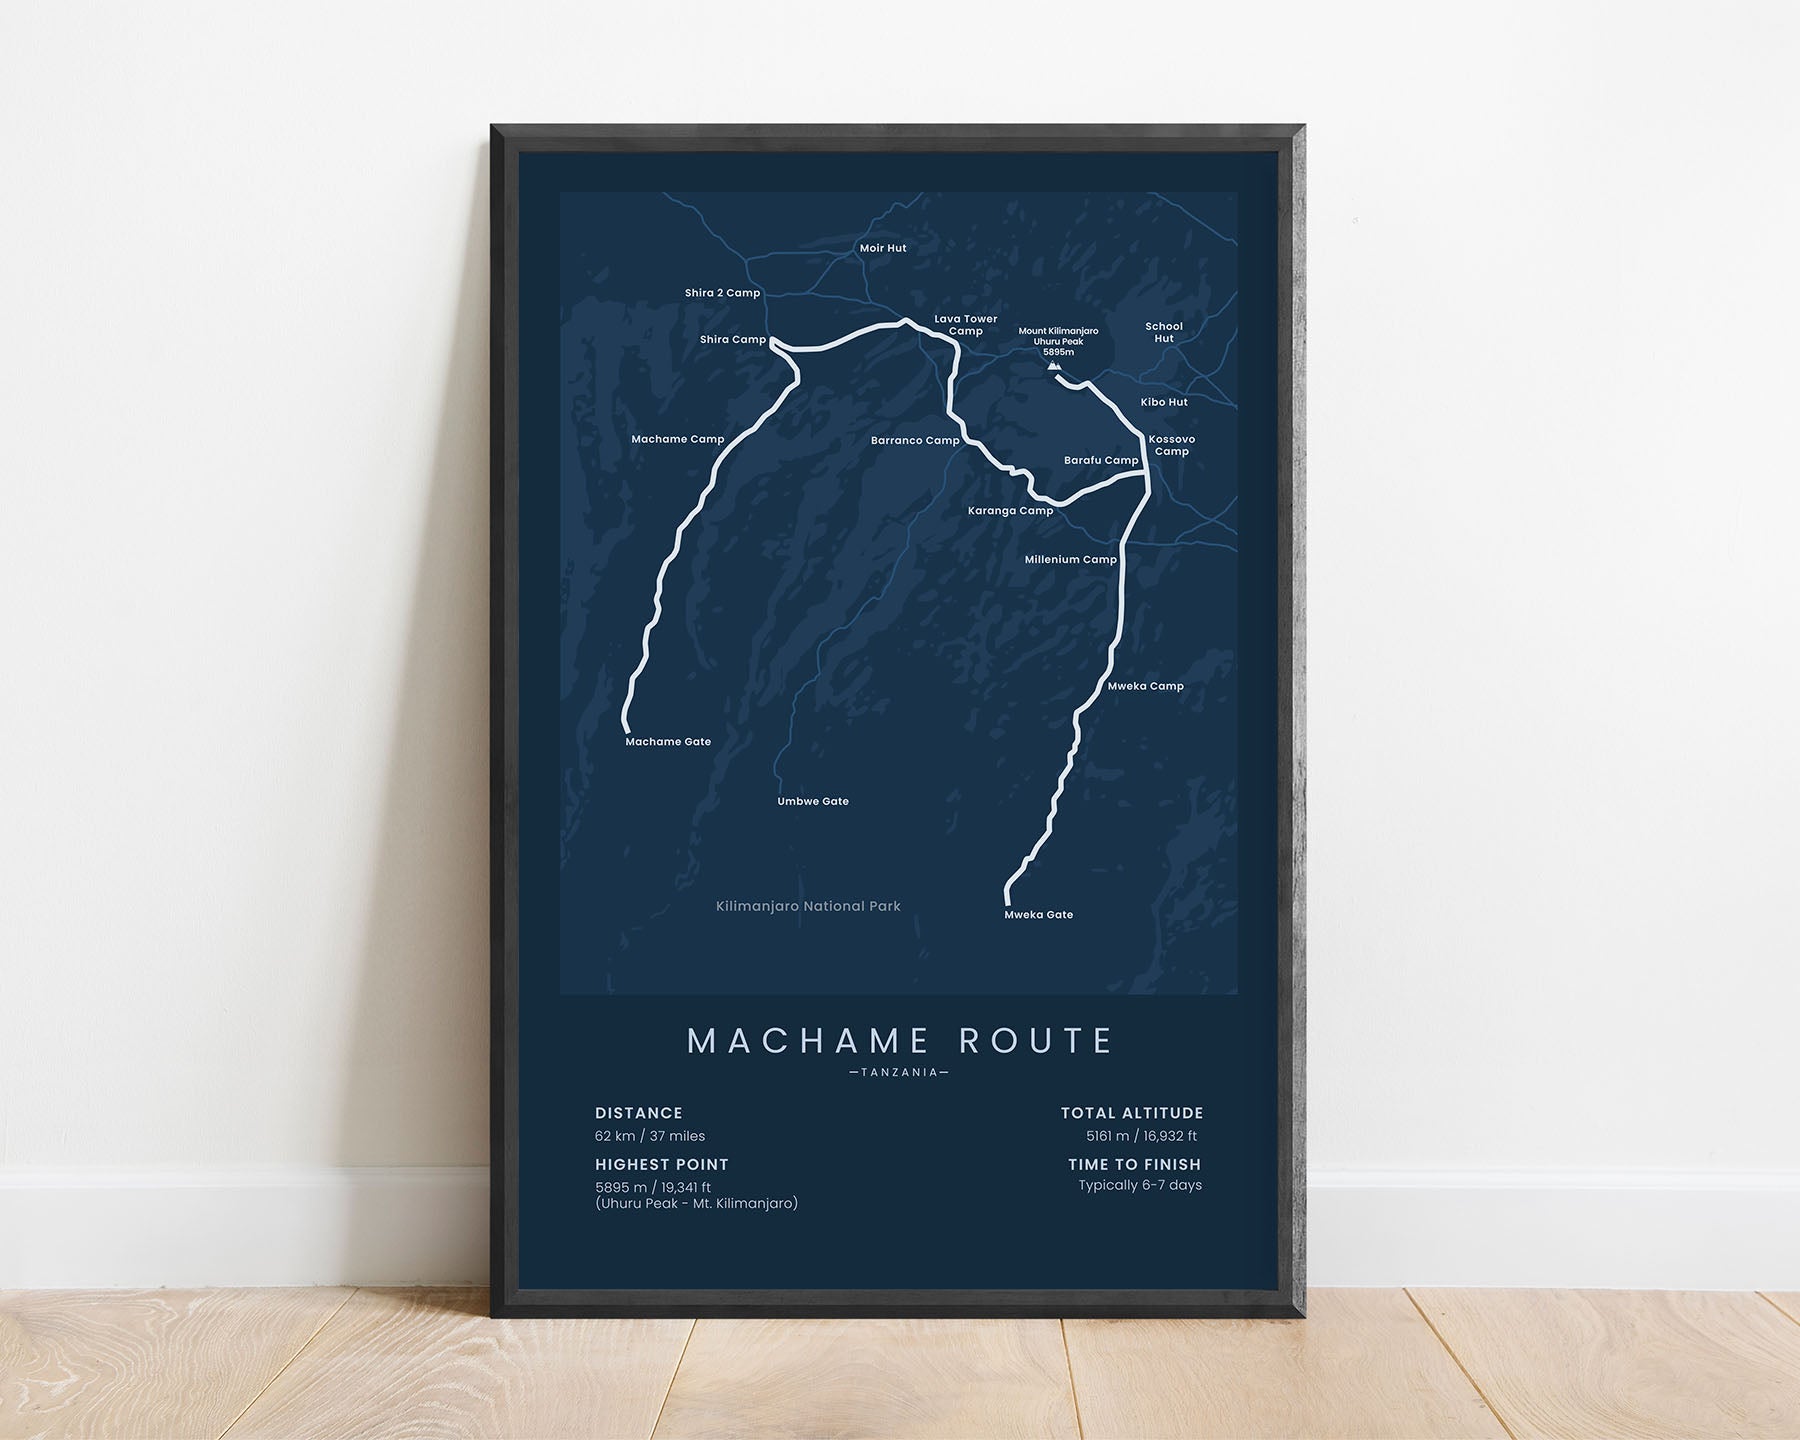 Machame Mt Kilimanjaro Summit (Africa) trail map art with blue background